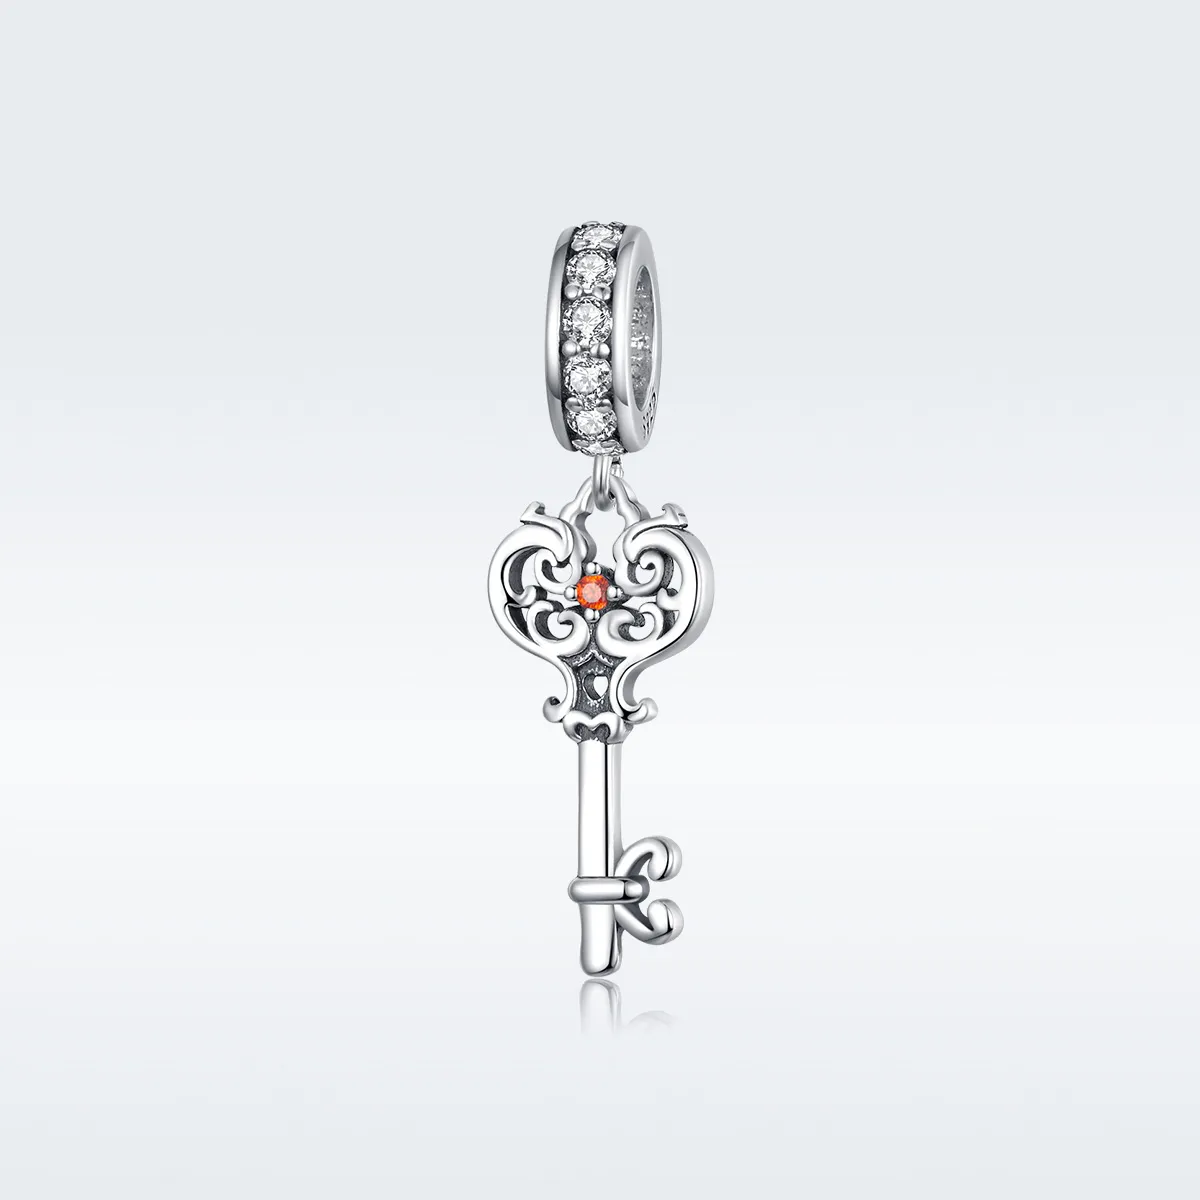 Talisman pandantiv Tip Pandora cu Heartslock din argint - BSC092